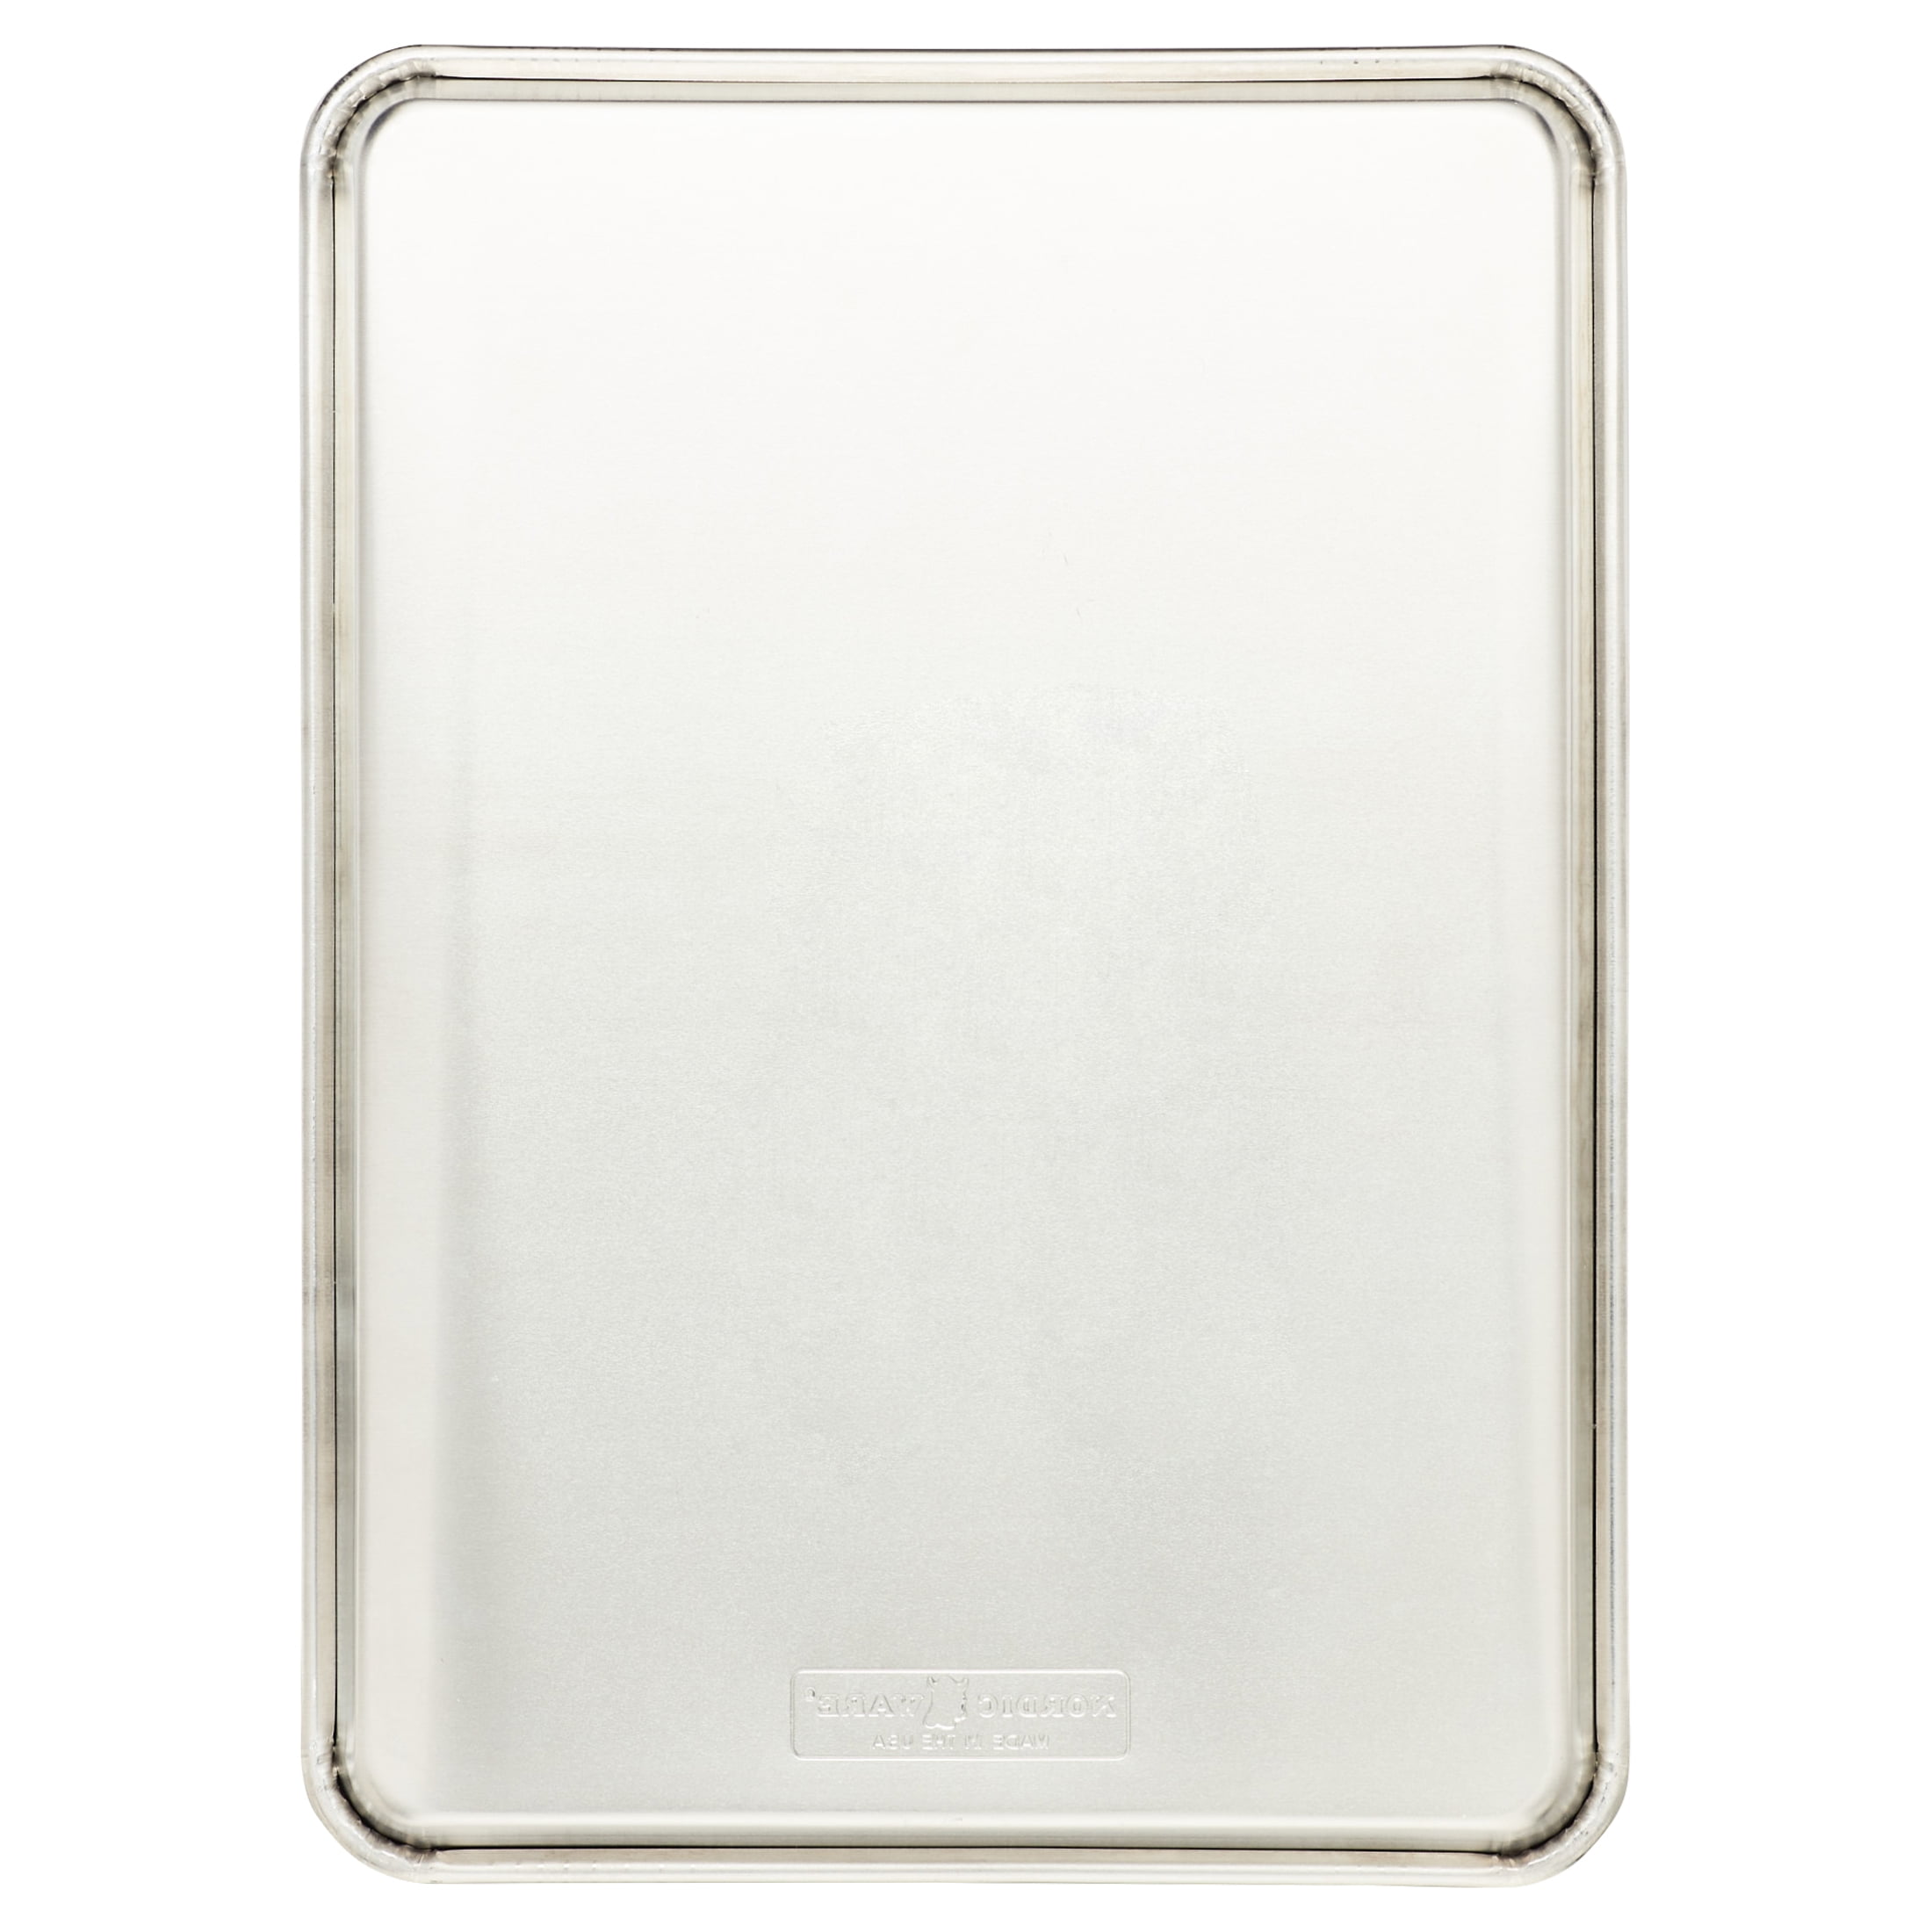 4 PC Nordic Ware Aluminum Baking Sheet – R & B Import